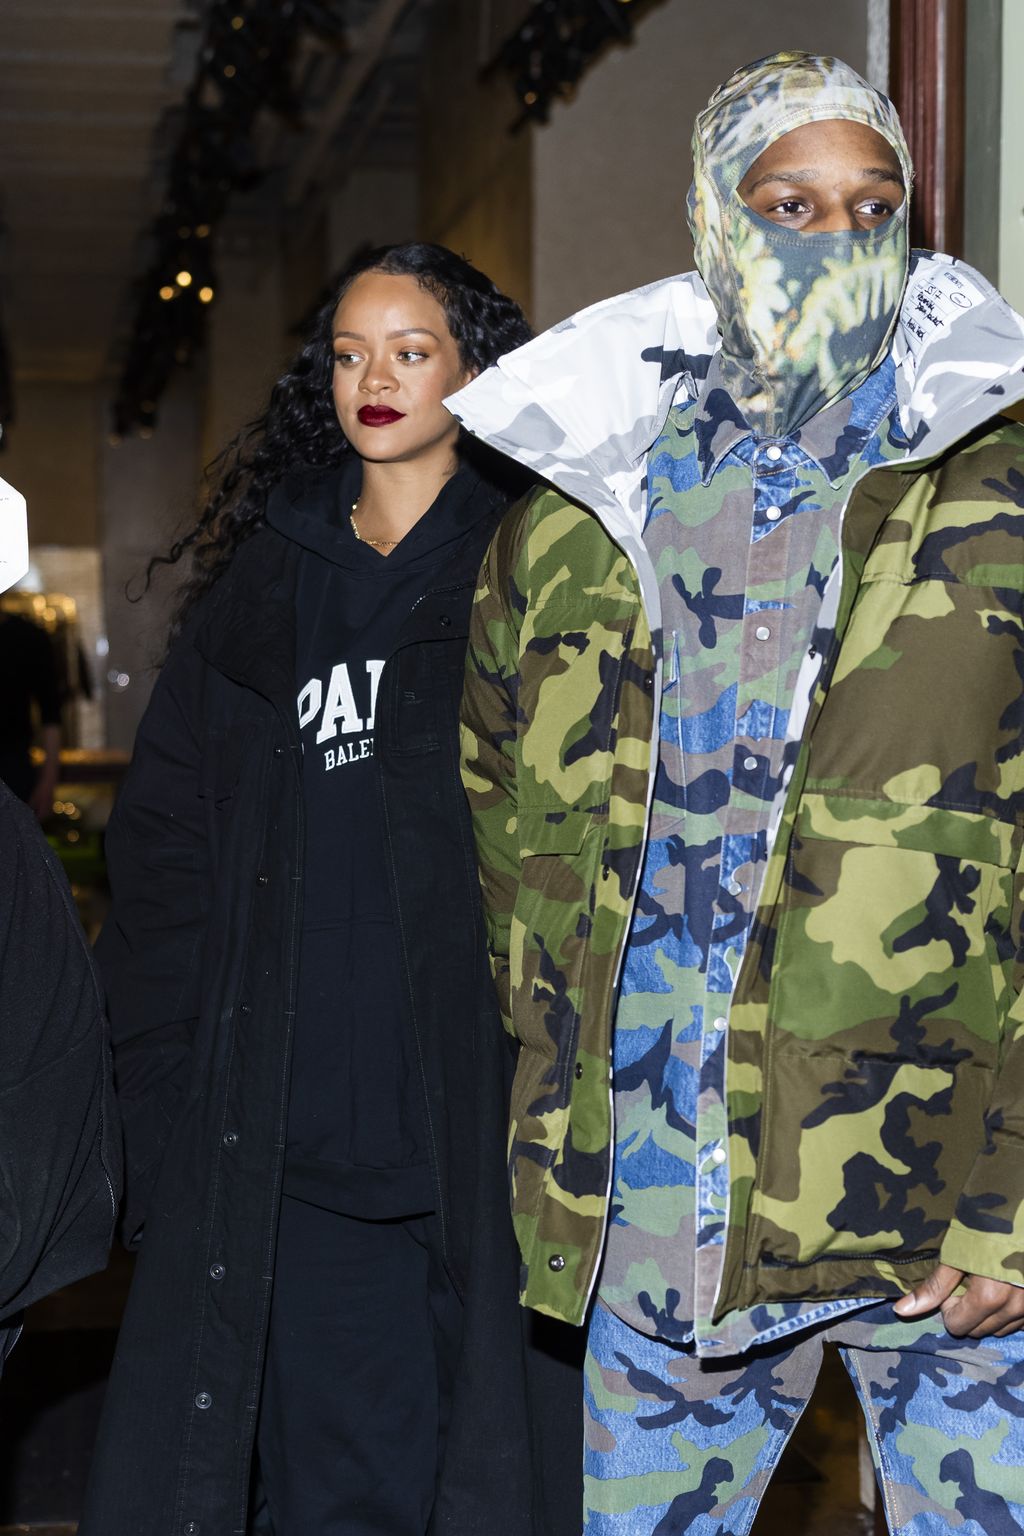 NEW YORK, NEW YORK - JANUARY 21: Rihanna (L) and A$AP Rocky are seen shopping at Bottega Veneta SoHo on January 21, 2022 in New York City. (Photo by Gotham/GC Images)